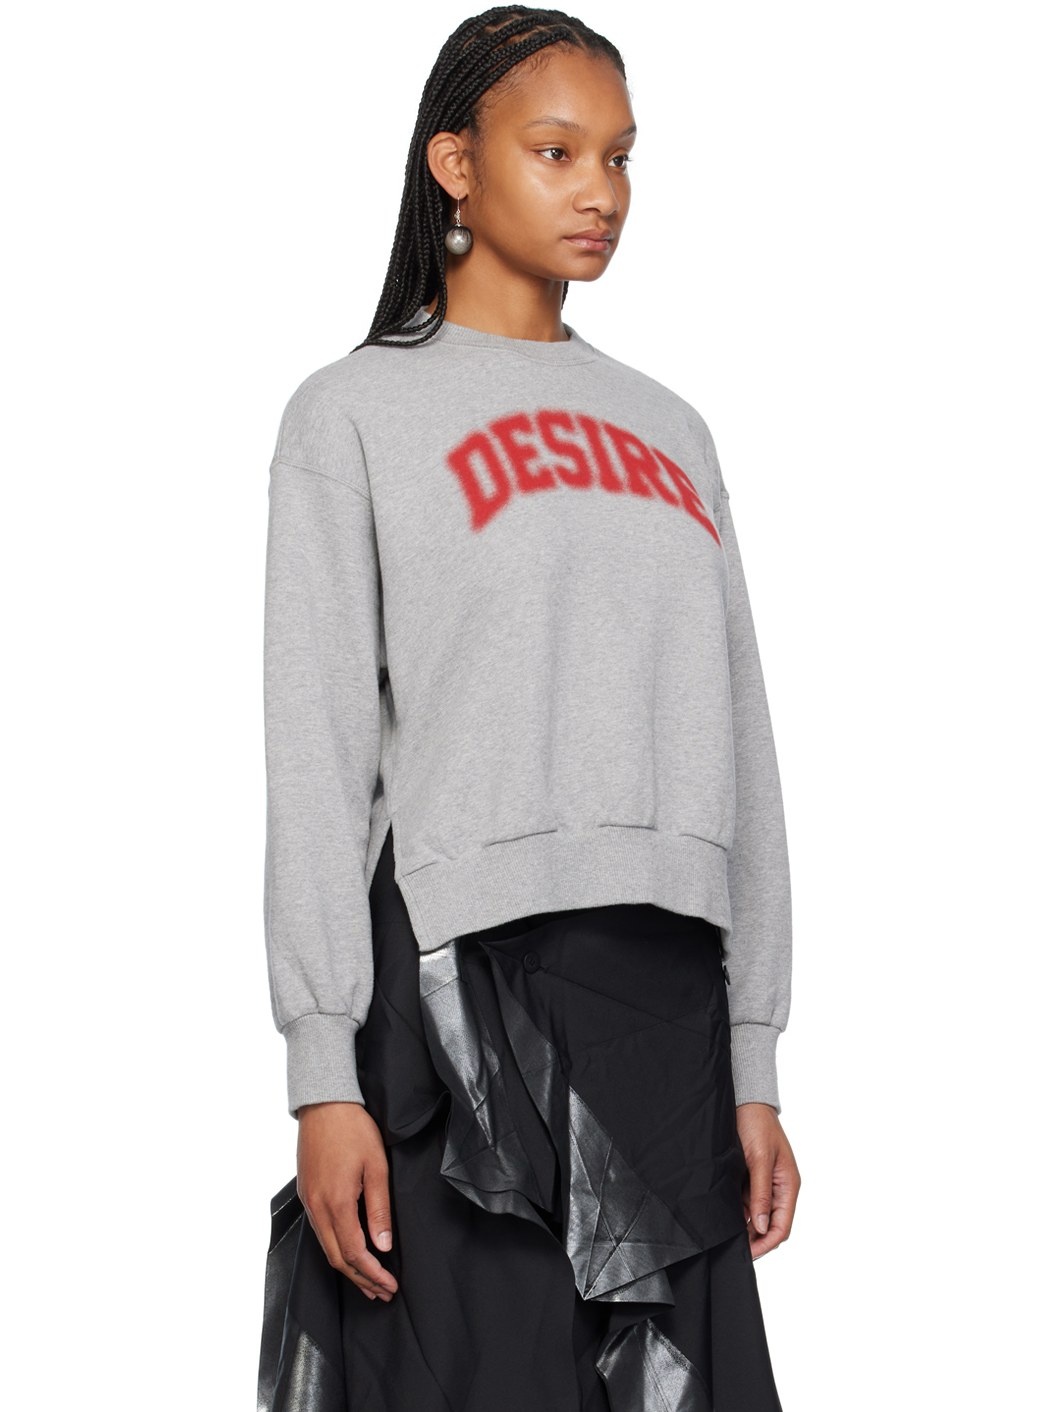 Gray 'Desire' Sweatshirt - 2